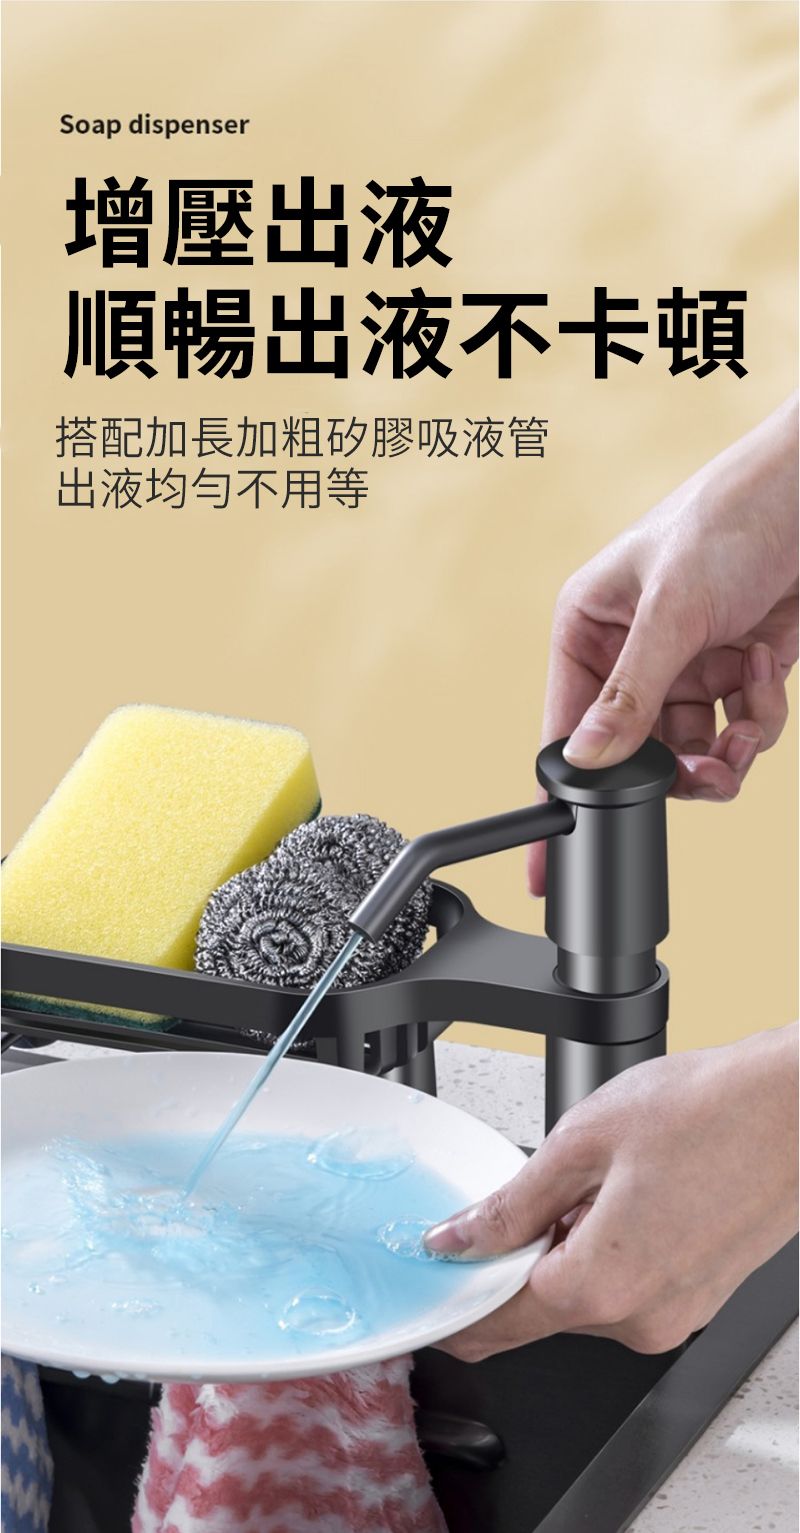 Soap dispenser增壓出液順暢出液不卡頓搭配加長加粗矽膠吸液管出液均勻不用等